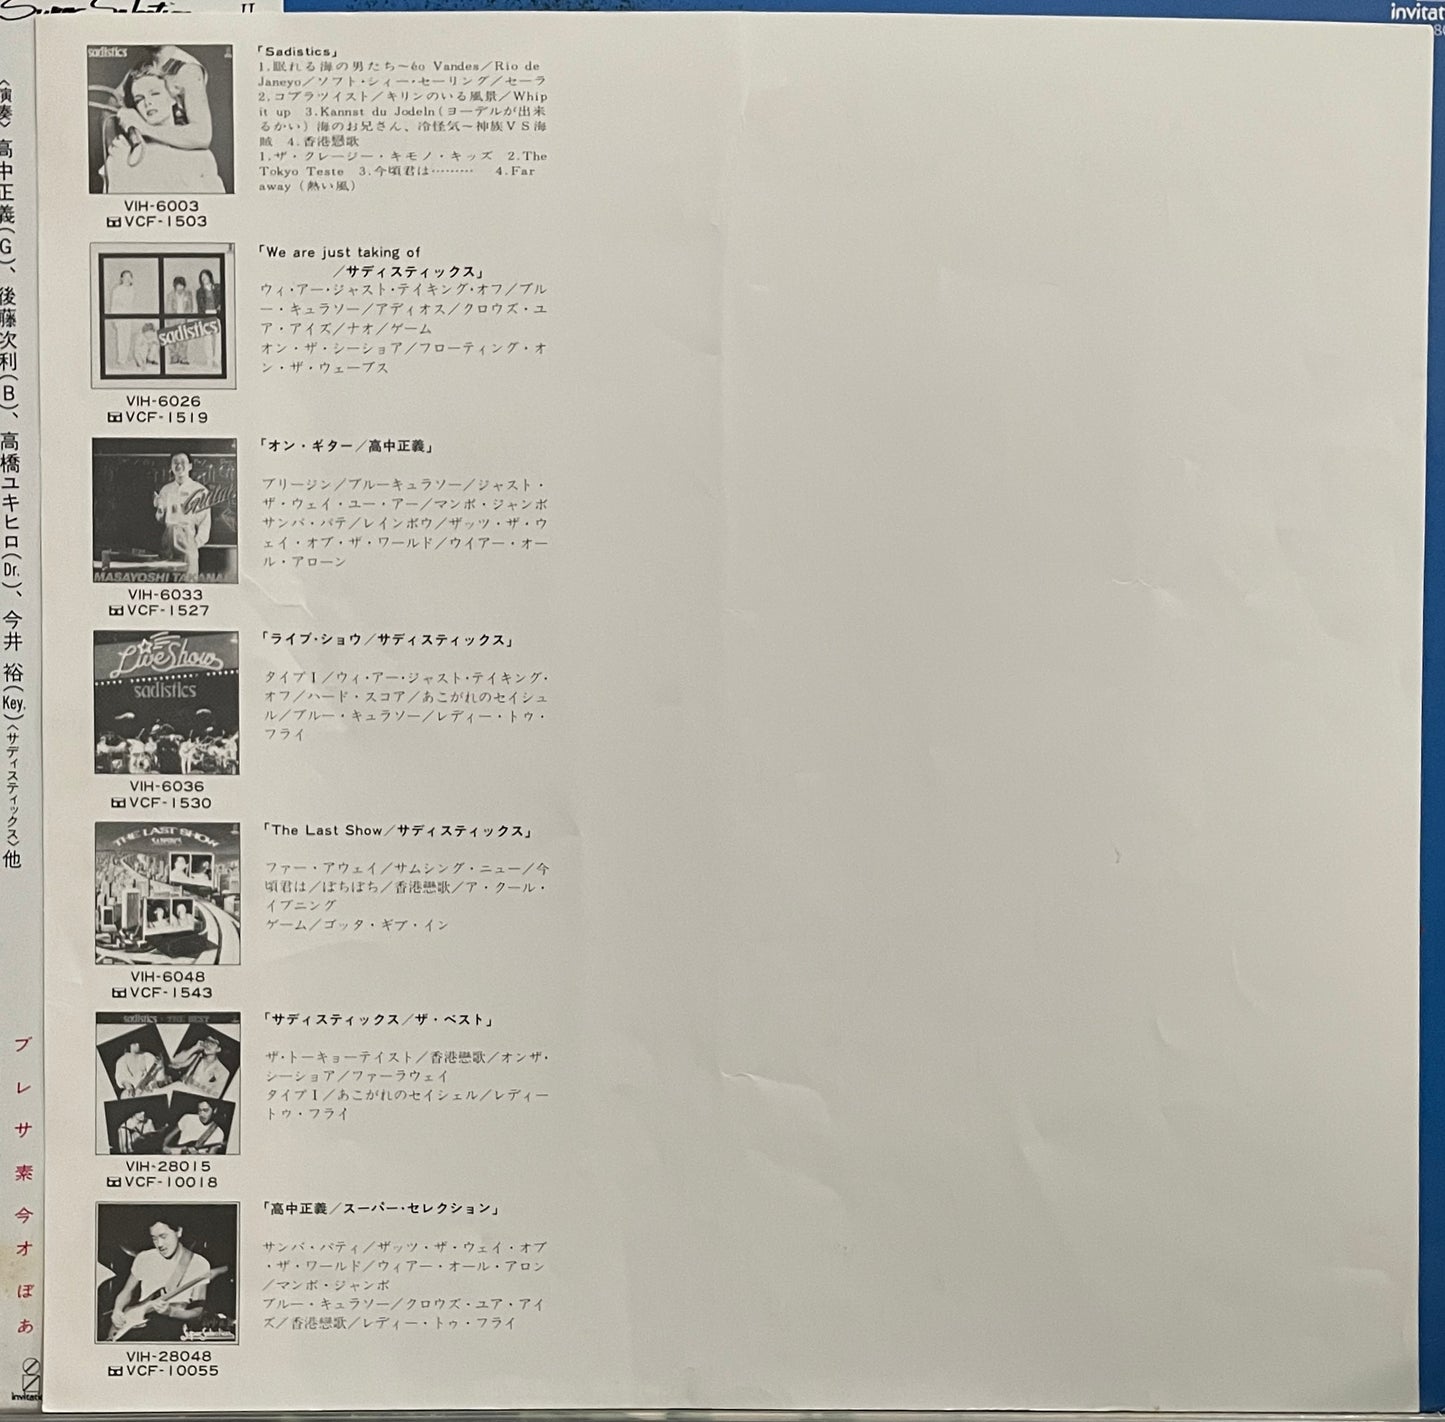 Masayoshi Takanaka “Super Selection II” (1981)